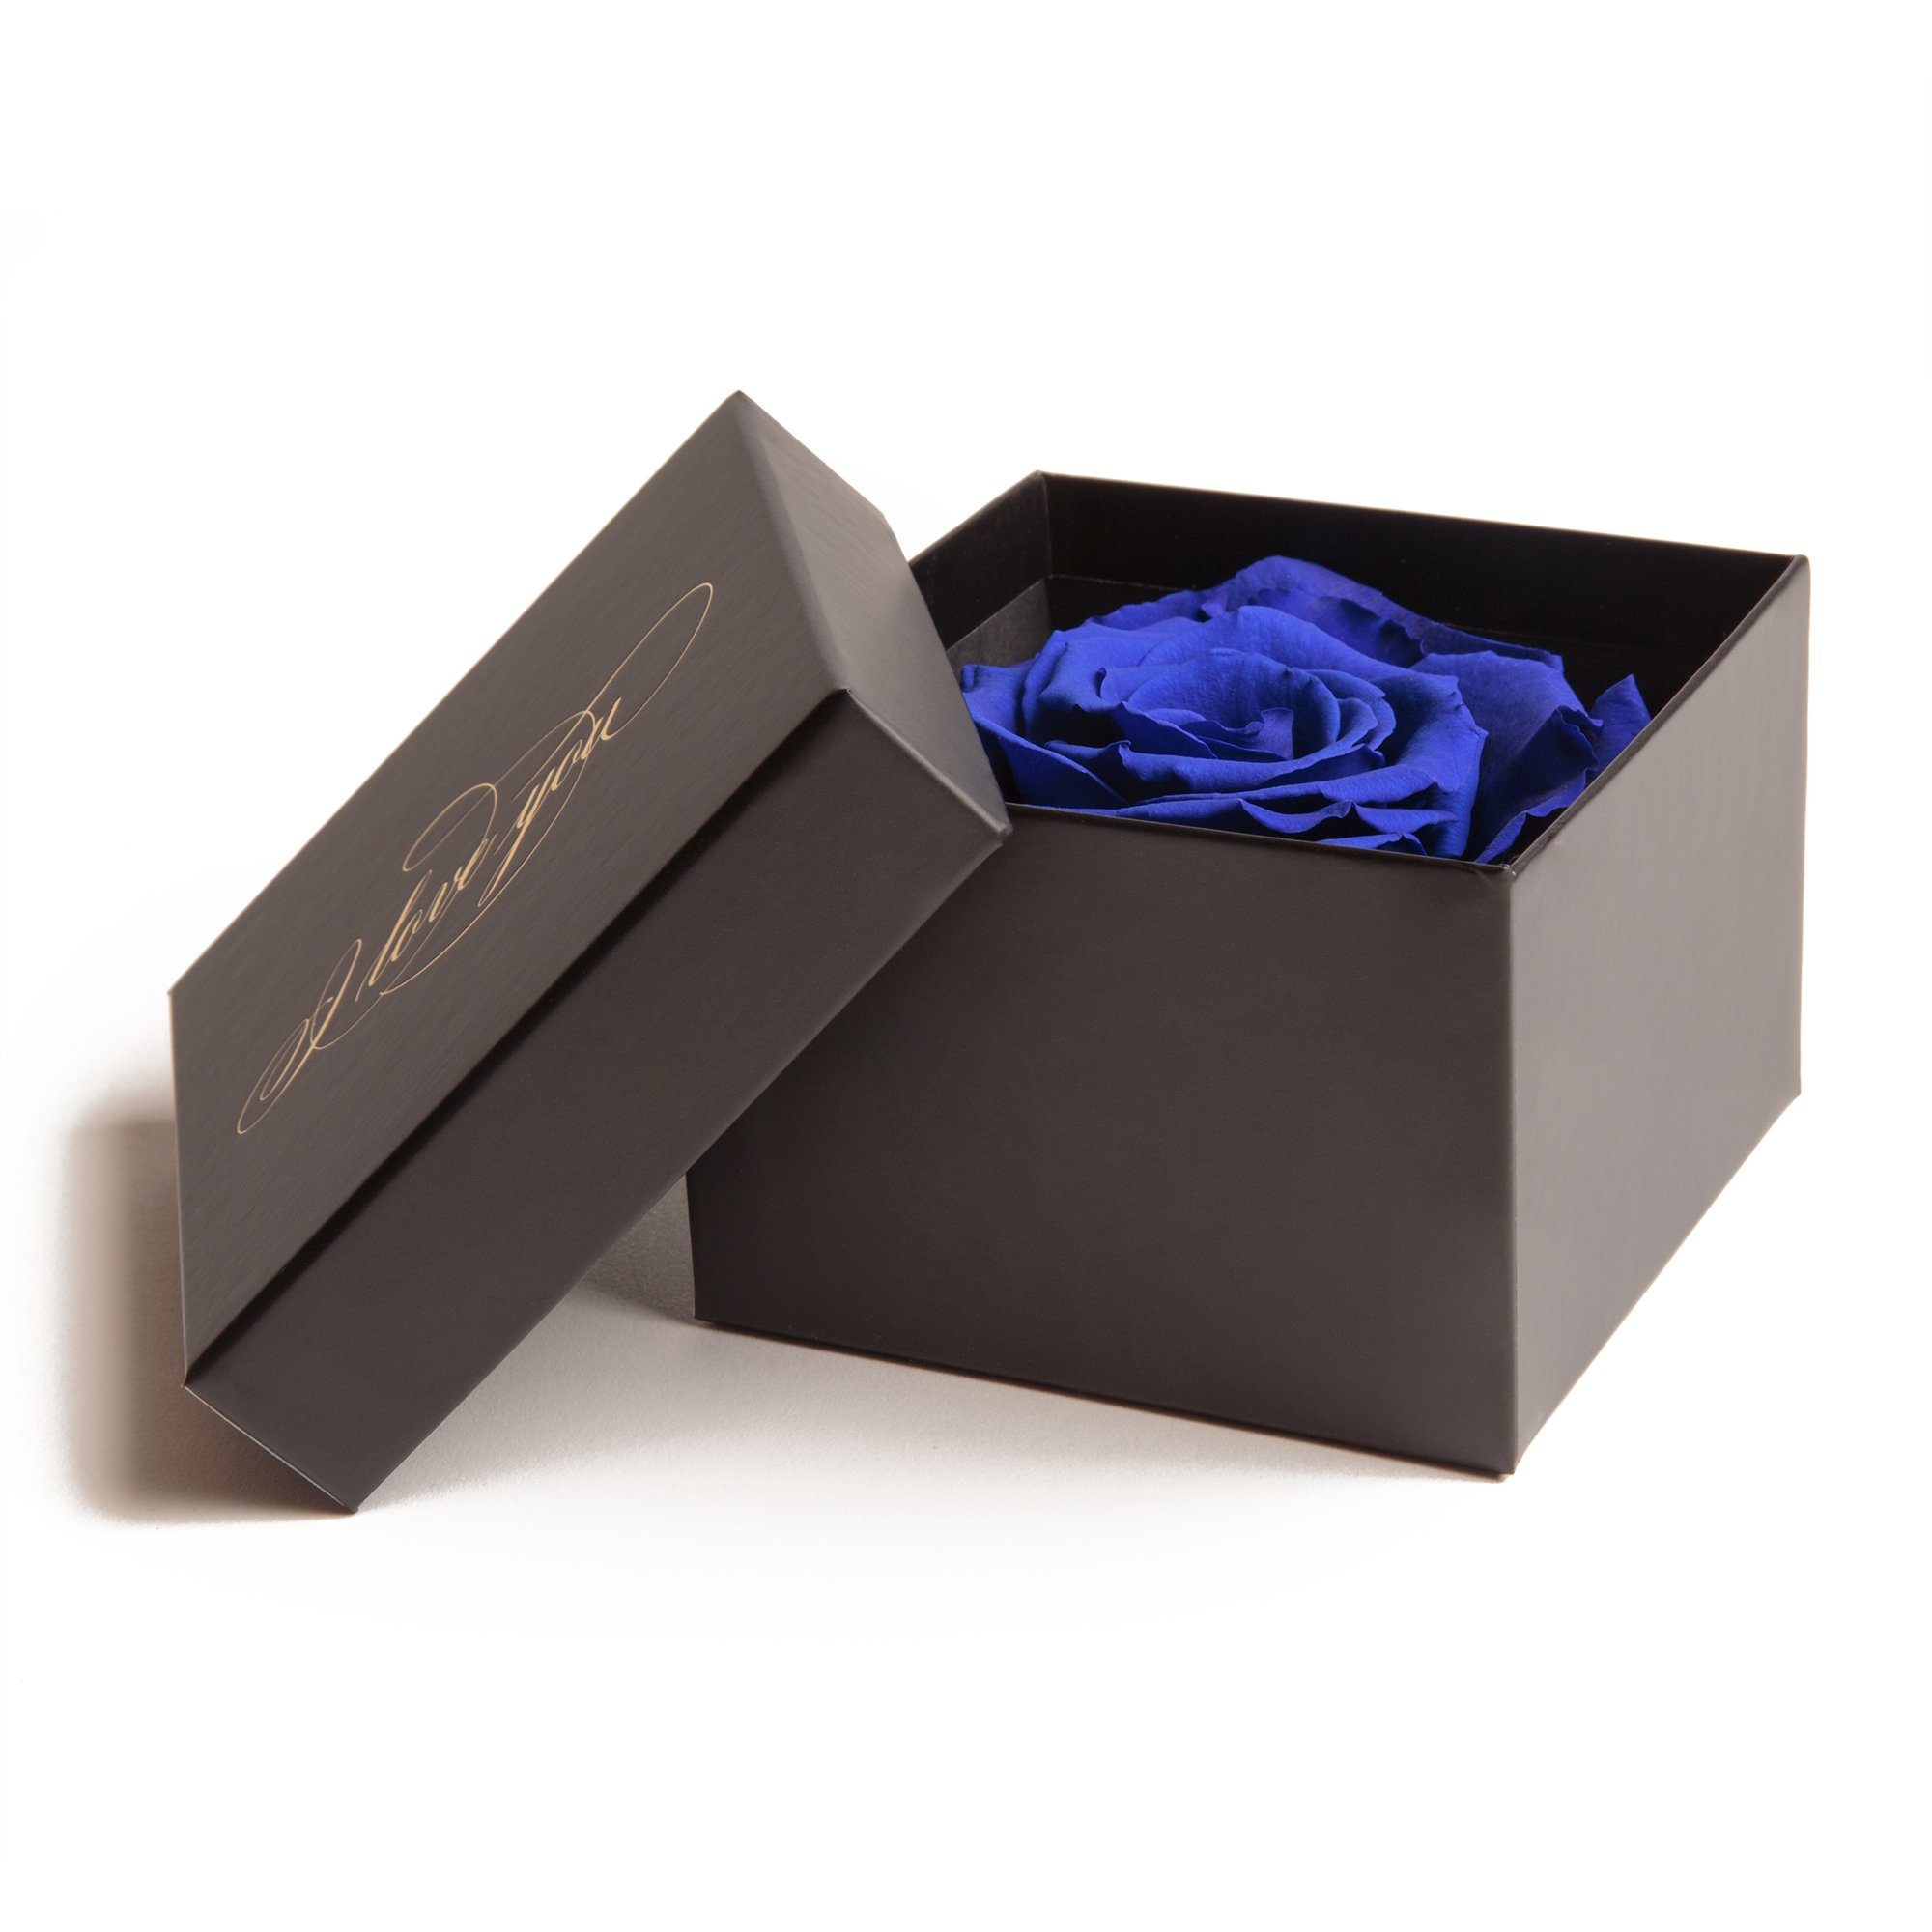 Blau Rose, Box Echte Liebesbeweis Love Kunstblume Idee konserviert ROSEMARIE 6 I SCHULZ Rose You Heidelberg, Geschenk Höhe Infinity cm, Rose